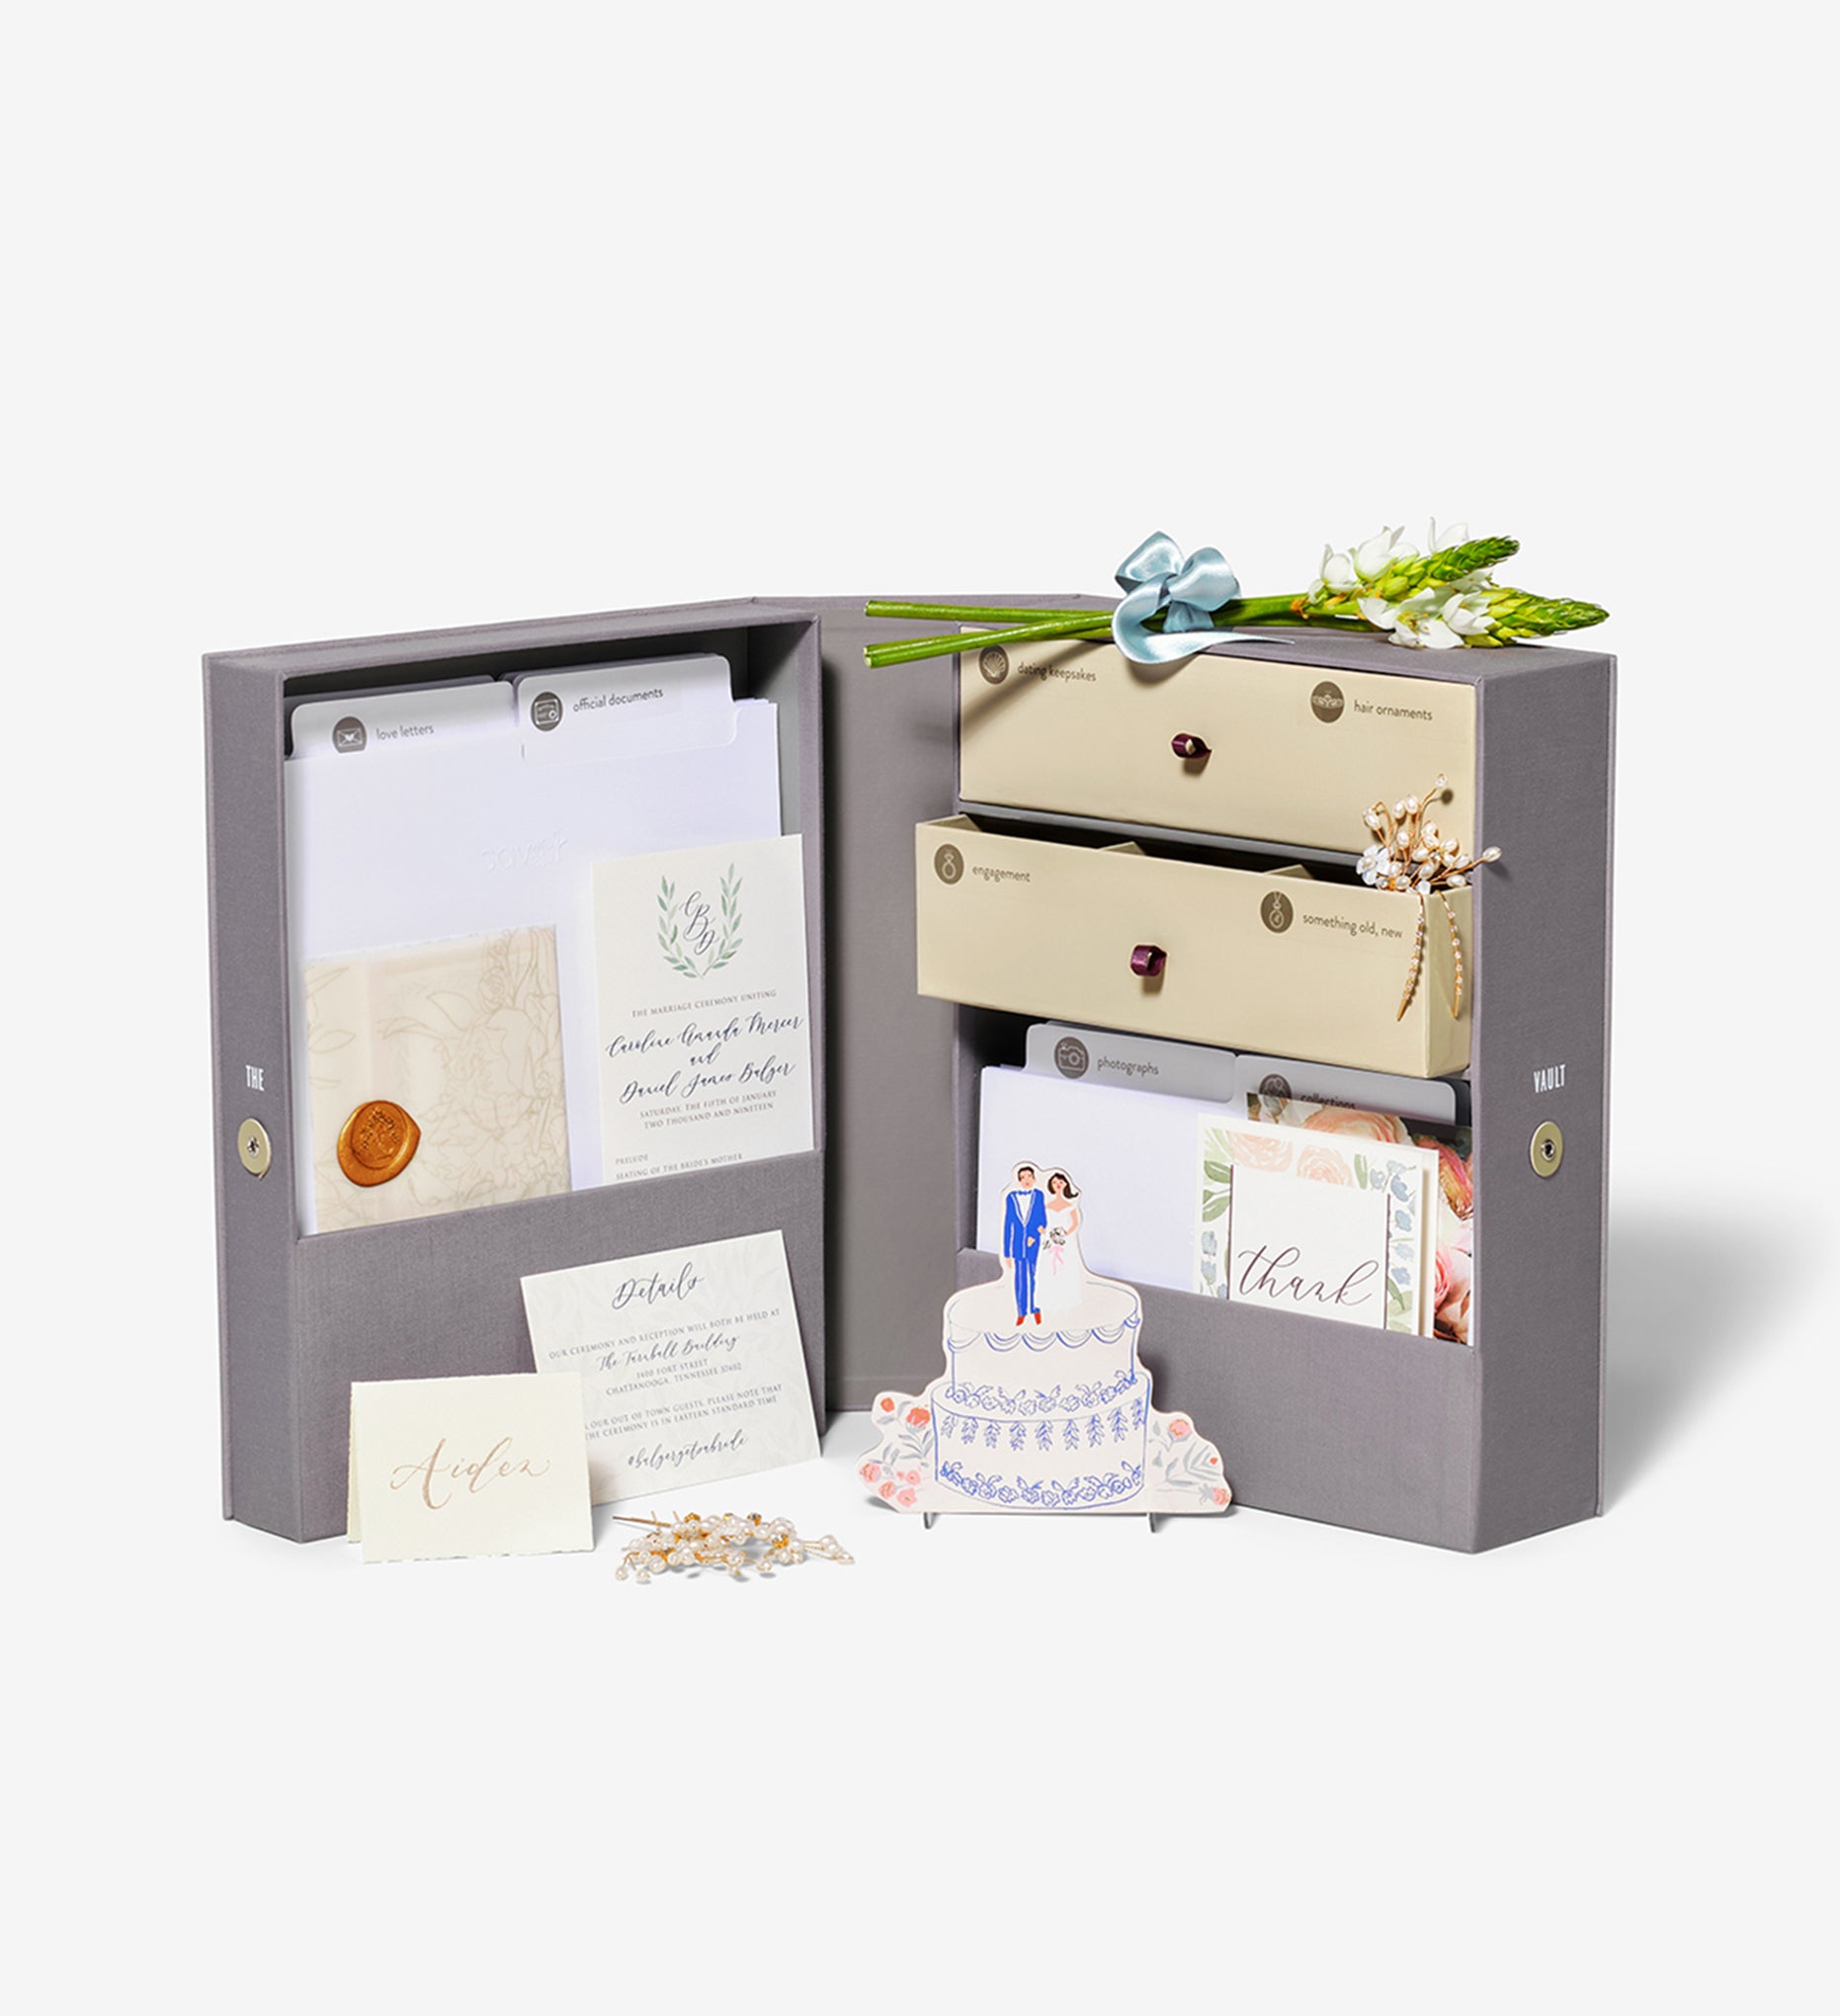 Open slate wedding vault keepsake box with wedding decorations